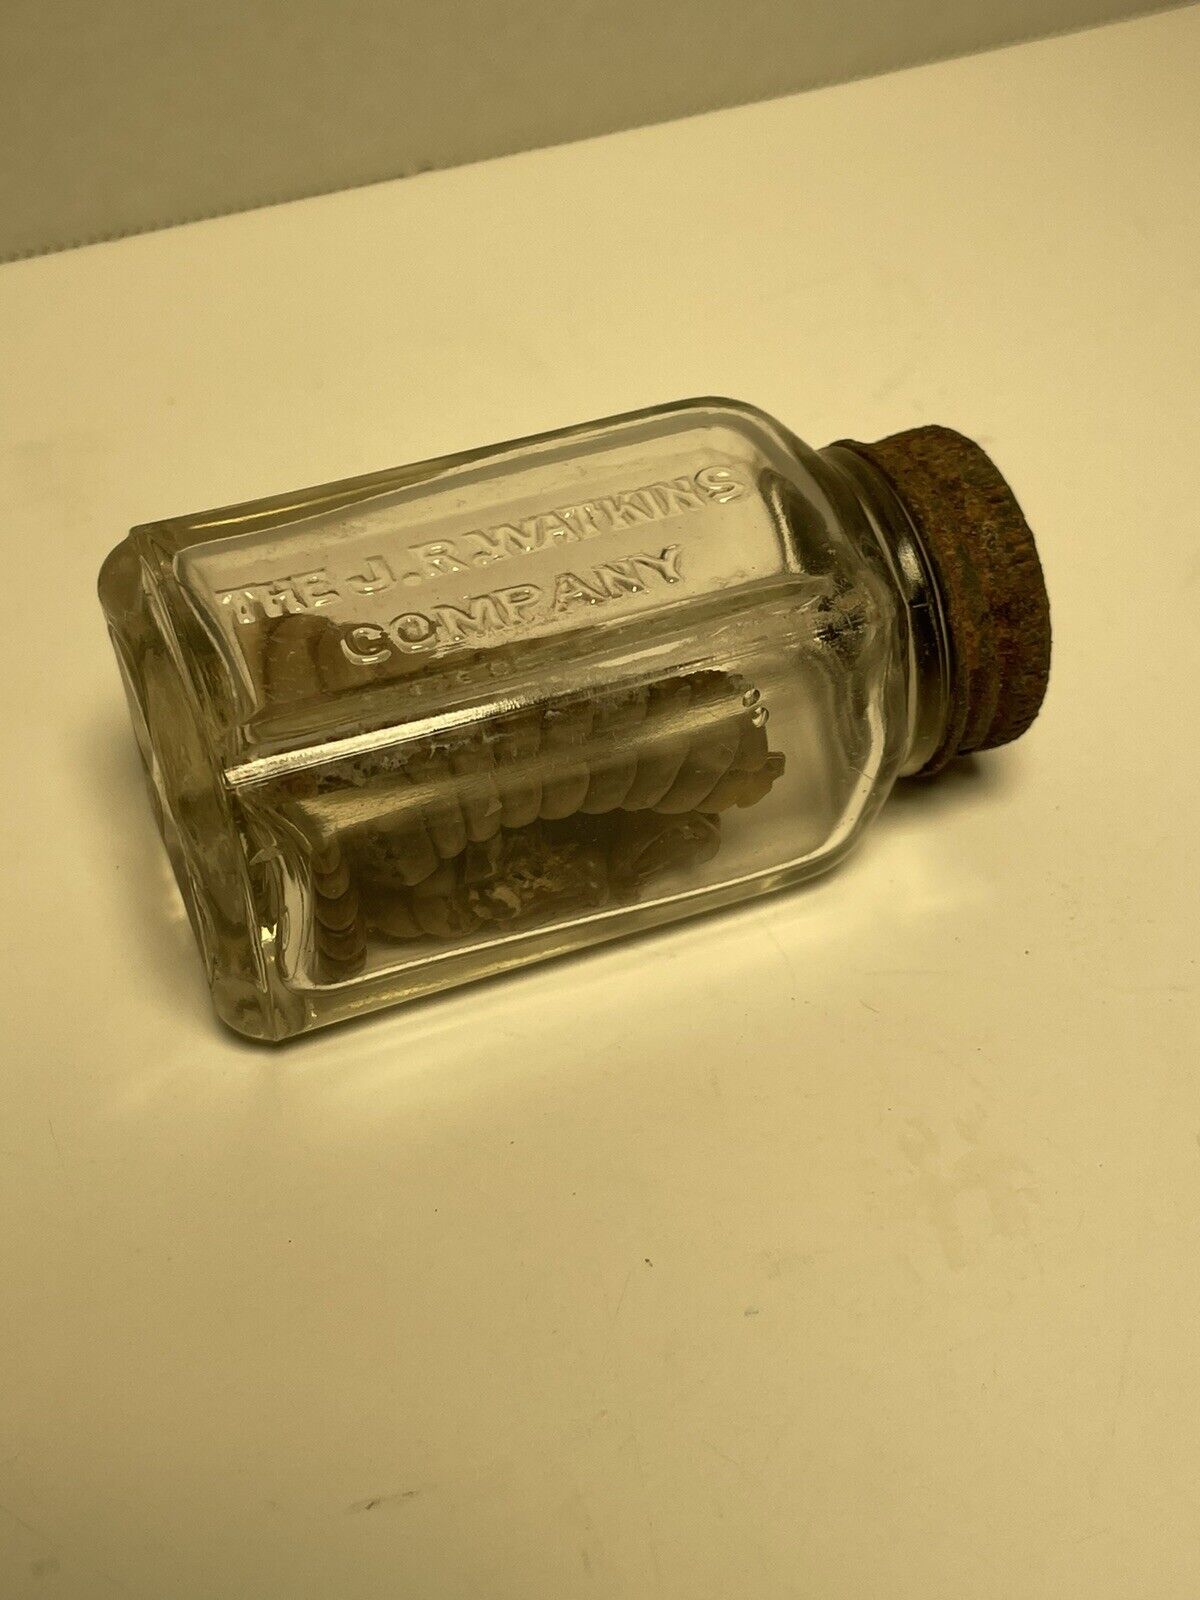 9 real rattlesnake rattles in a 110 year old j.r.Watkins bottle 